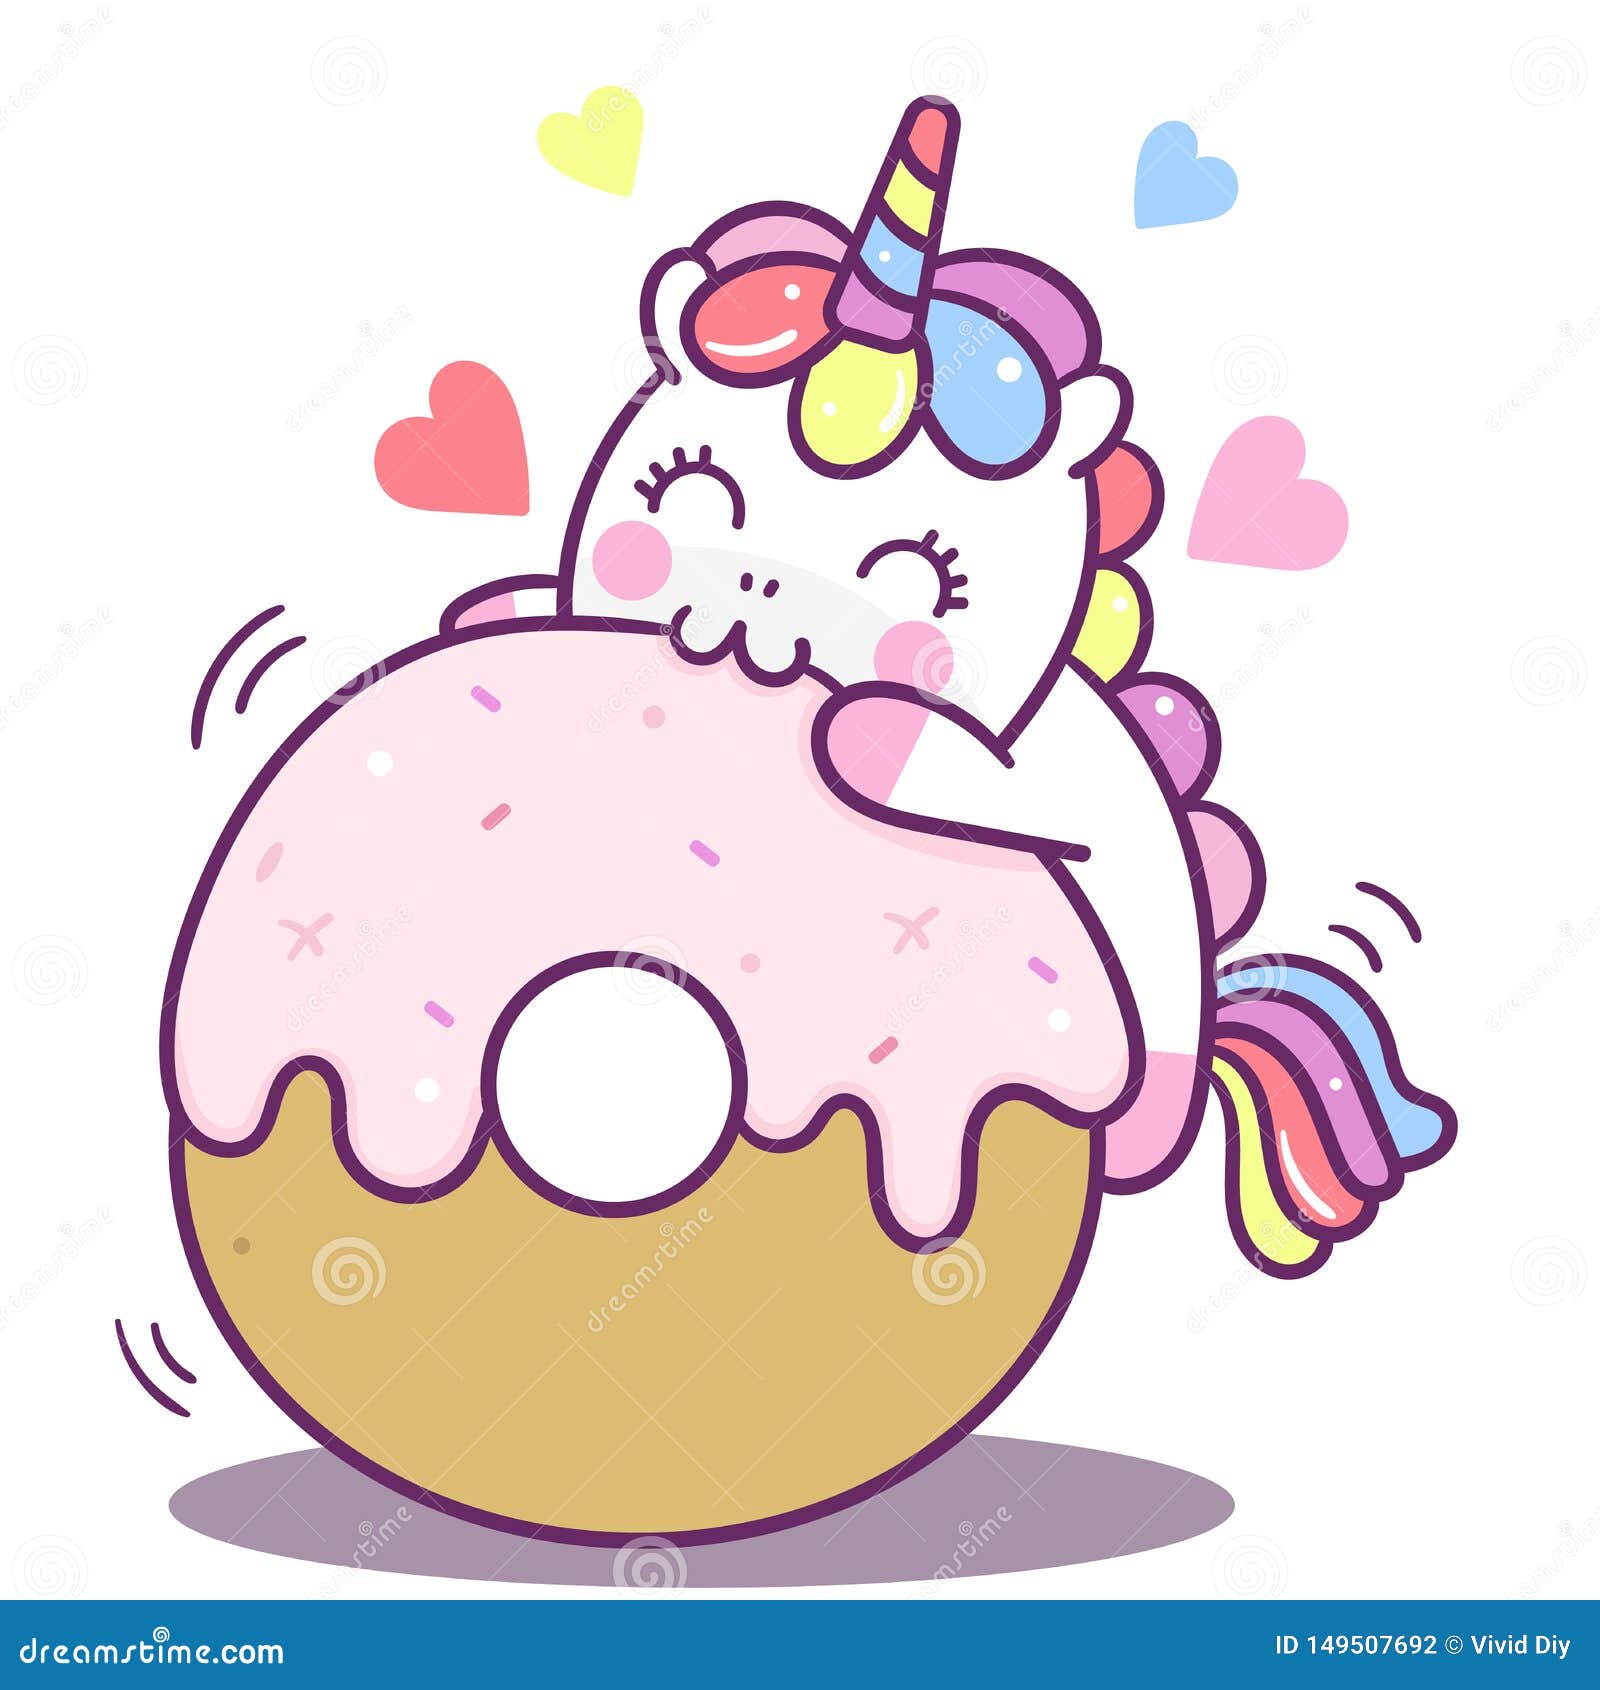 Illustrator Of Cute Unicorn Vector Donut Cake Happy Birthday Card Kawaii Pony Cartoon Doodle Nursery Decoration Stock Vector Illustration Of Comic Greeting